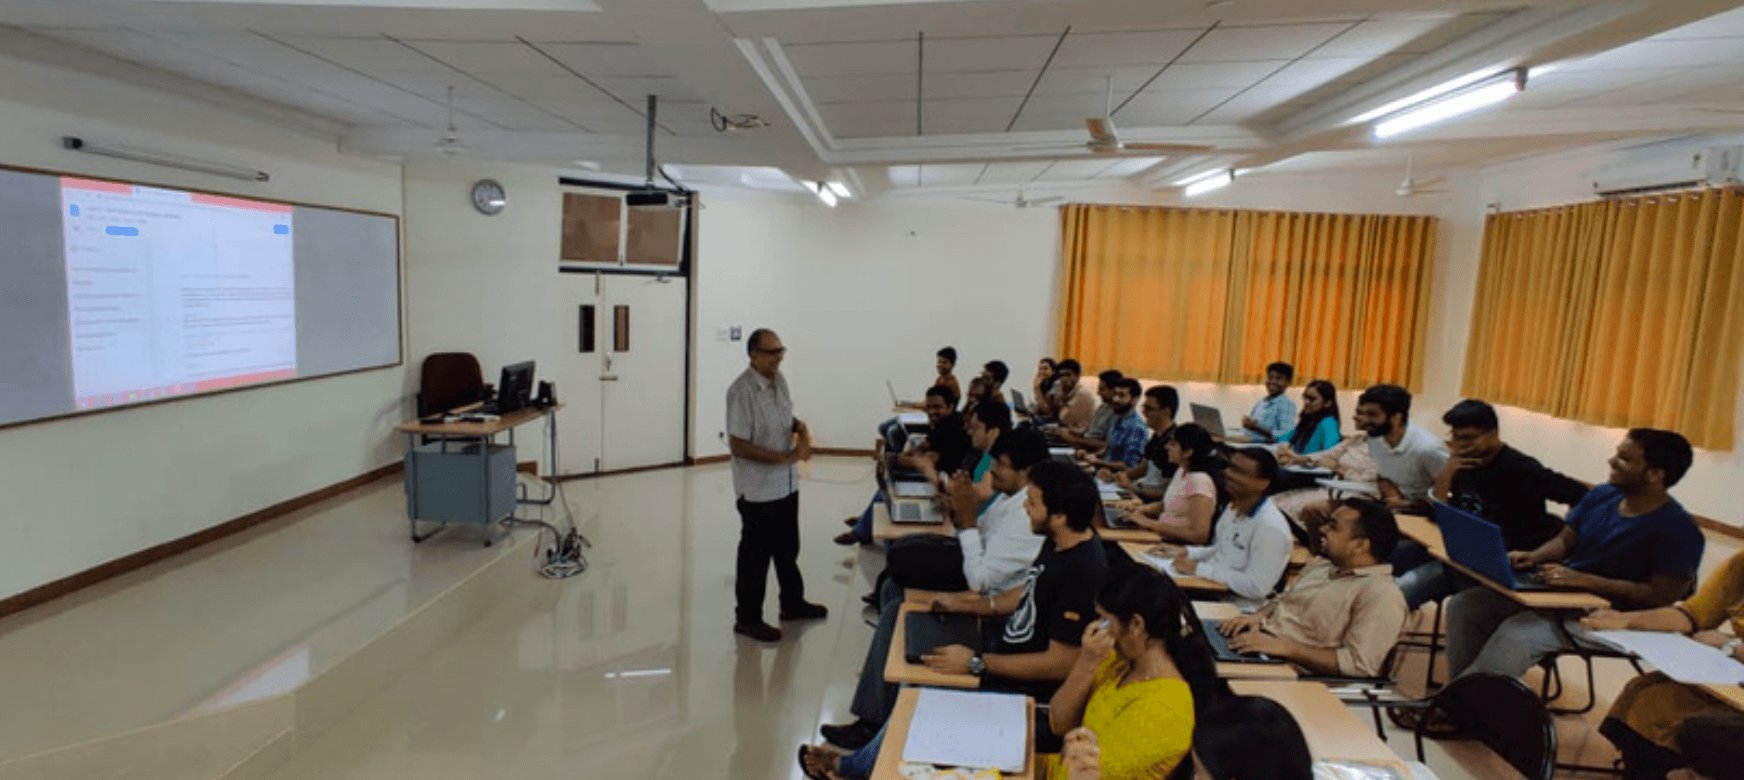 Ravi Visvanathan teaching his students in a classroom. 